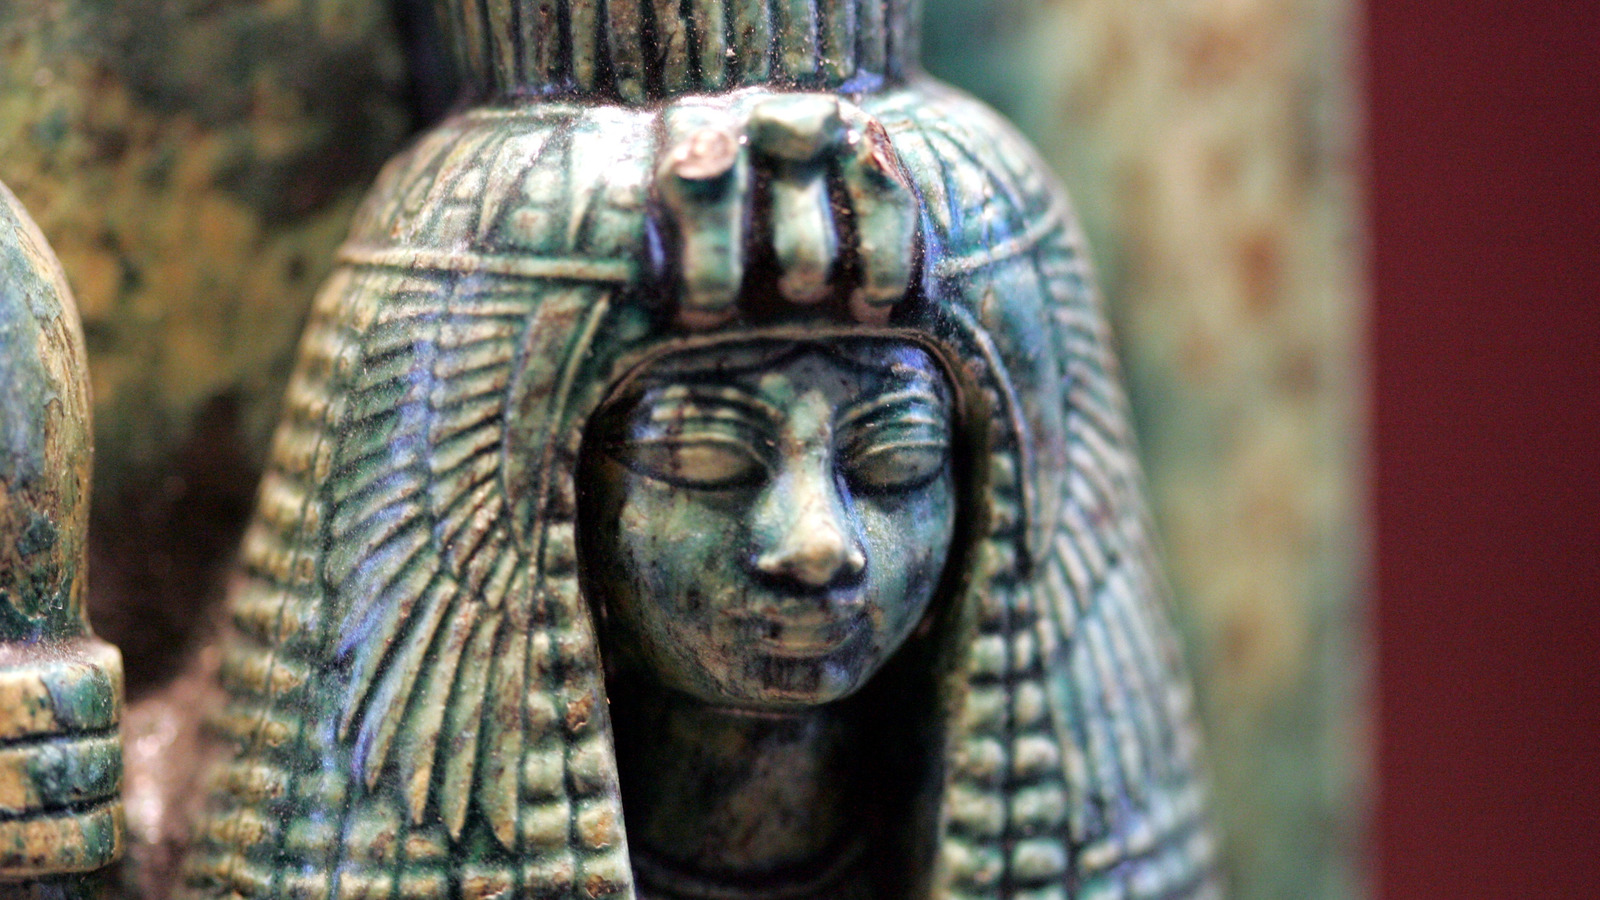 The Other Ptolemy Girl - Arsinoe IV - Dangerous Women Project